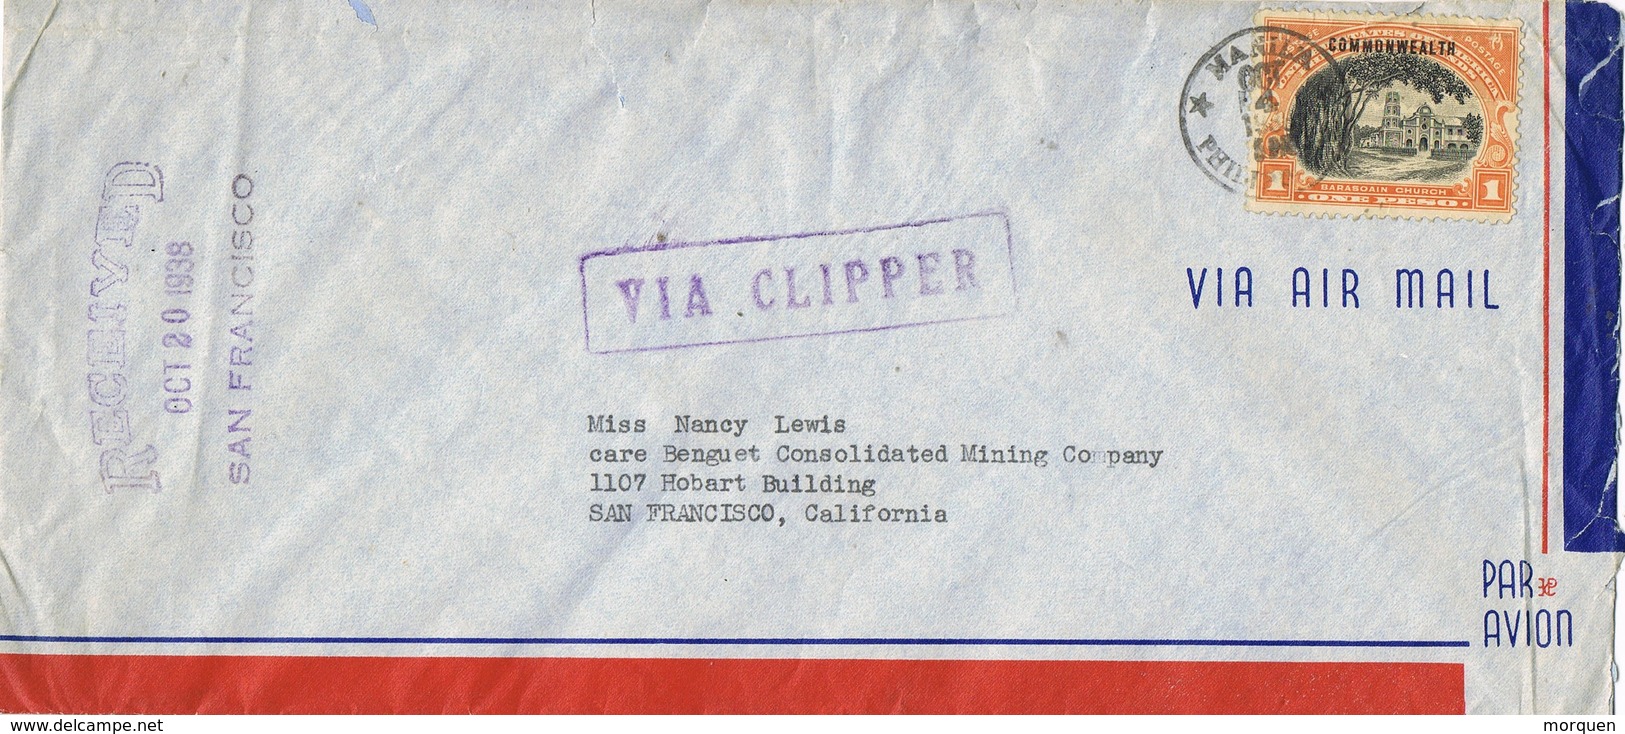 30839. Carta Aerea MANILA (Filipinas) 1936. Sobrecarga Commonwealth. VIA CLIPPER - Filipinas